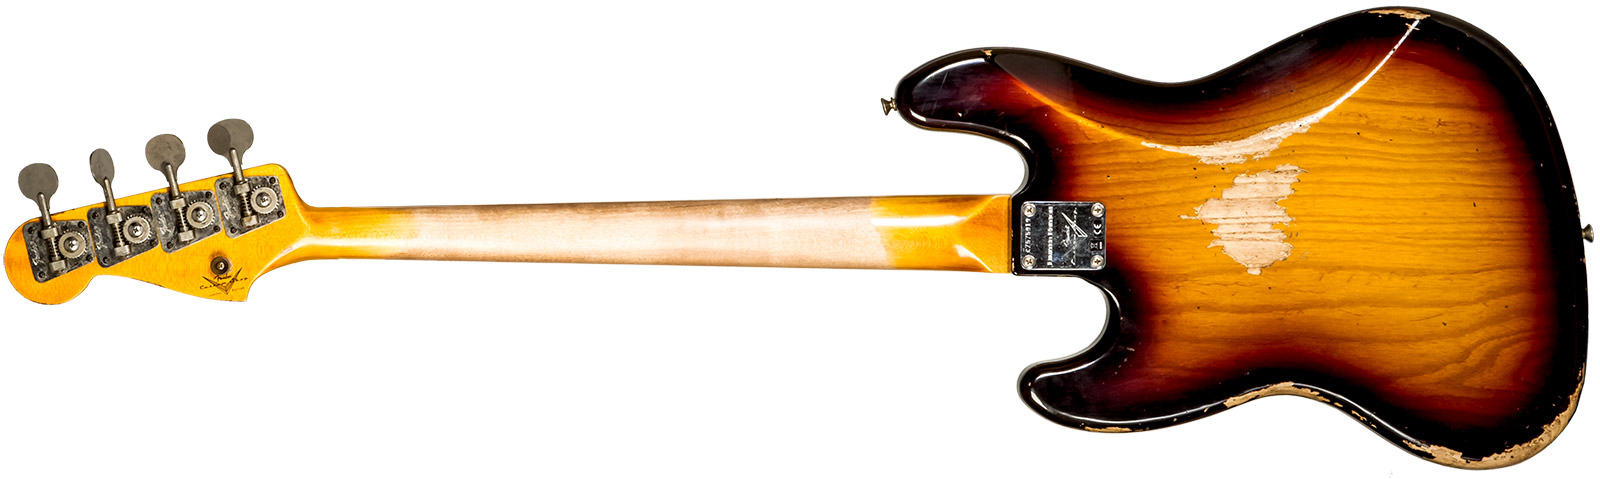 Fender Custom Shop Jazz Bass Custom Rw #cz575919 - Heavy Relic 3-color Sunburst - Solid body electric bass - Variation 2